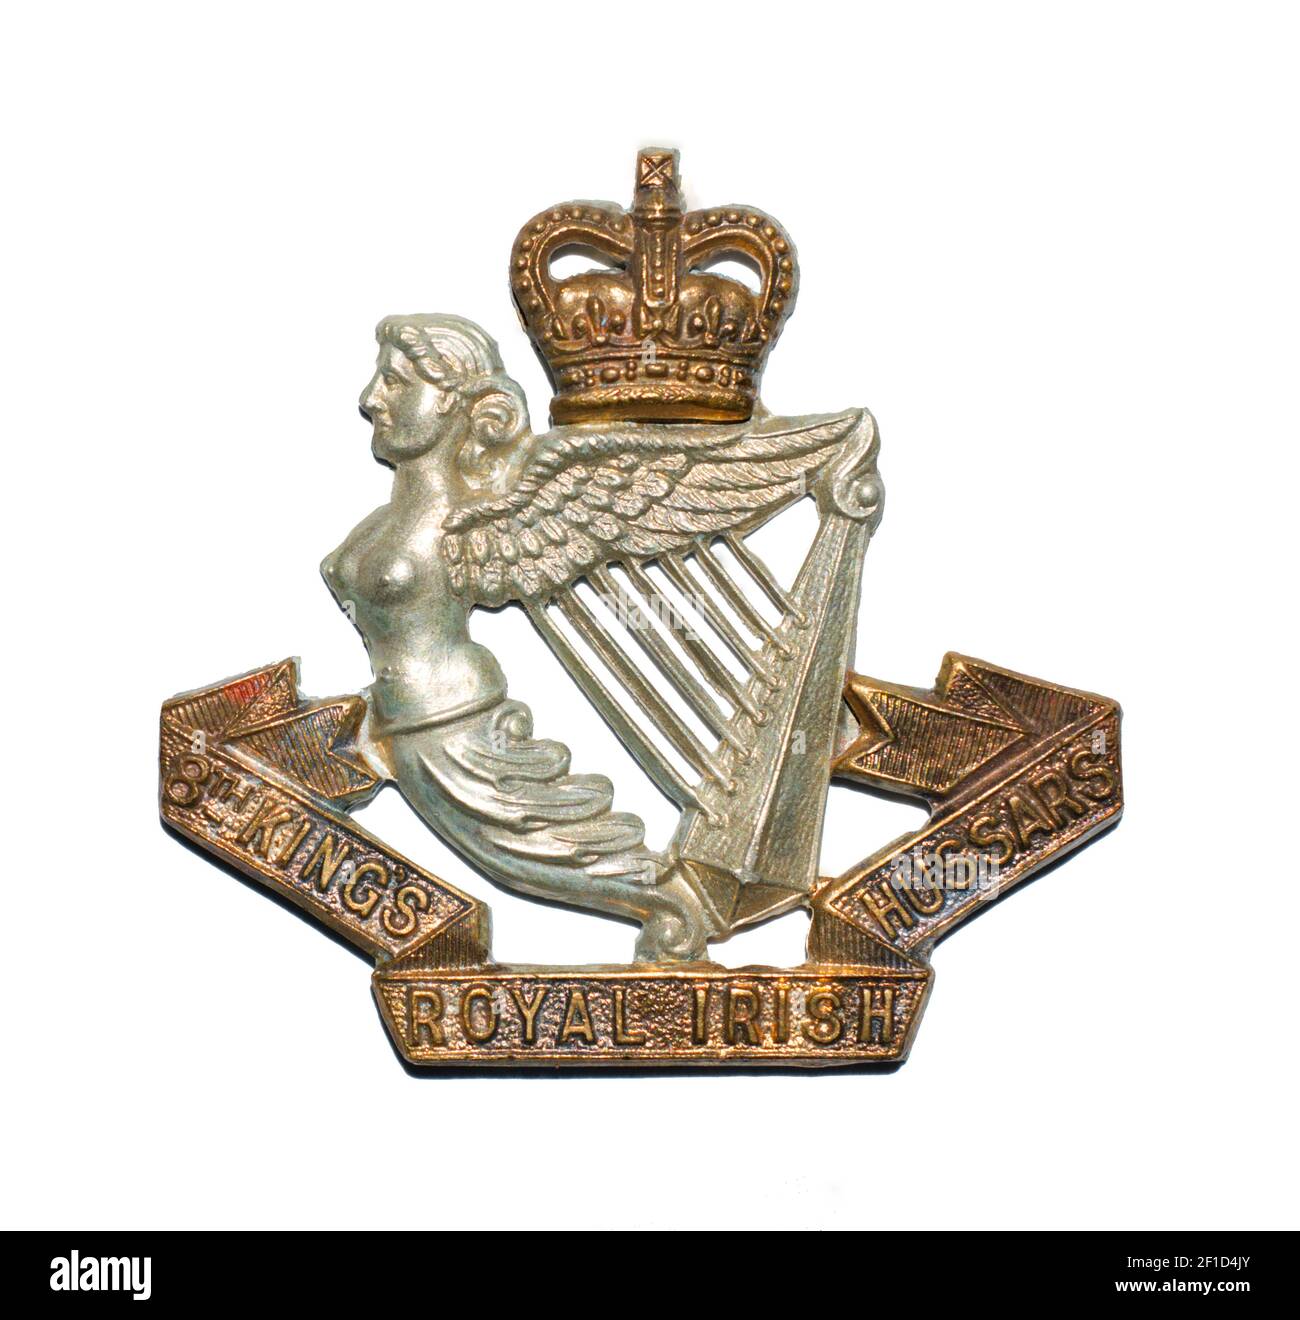 A cap badge of the 8th King's Royal Irish Hussars c. 1952-1958. Stock Photo